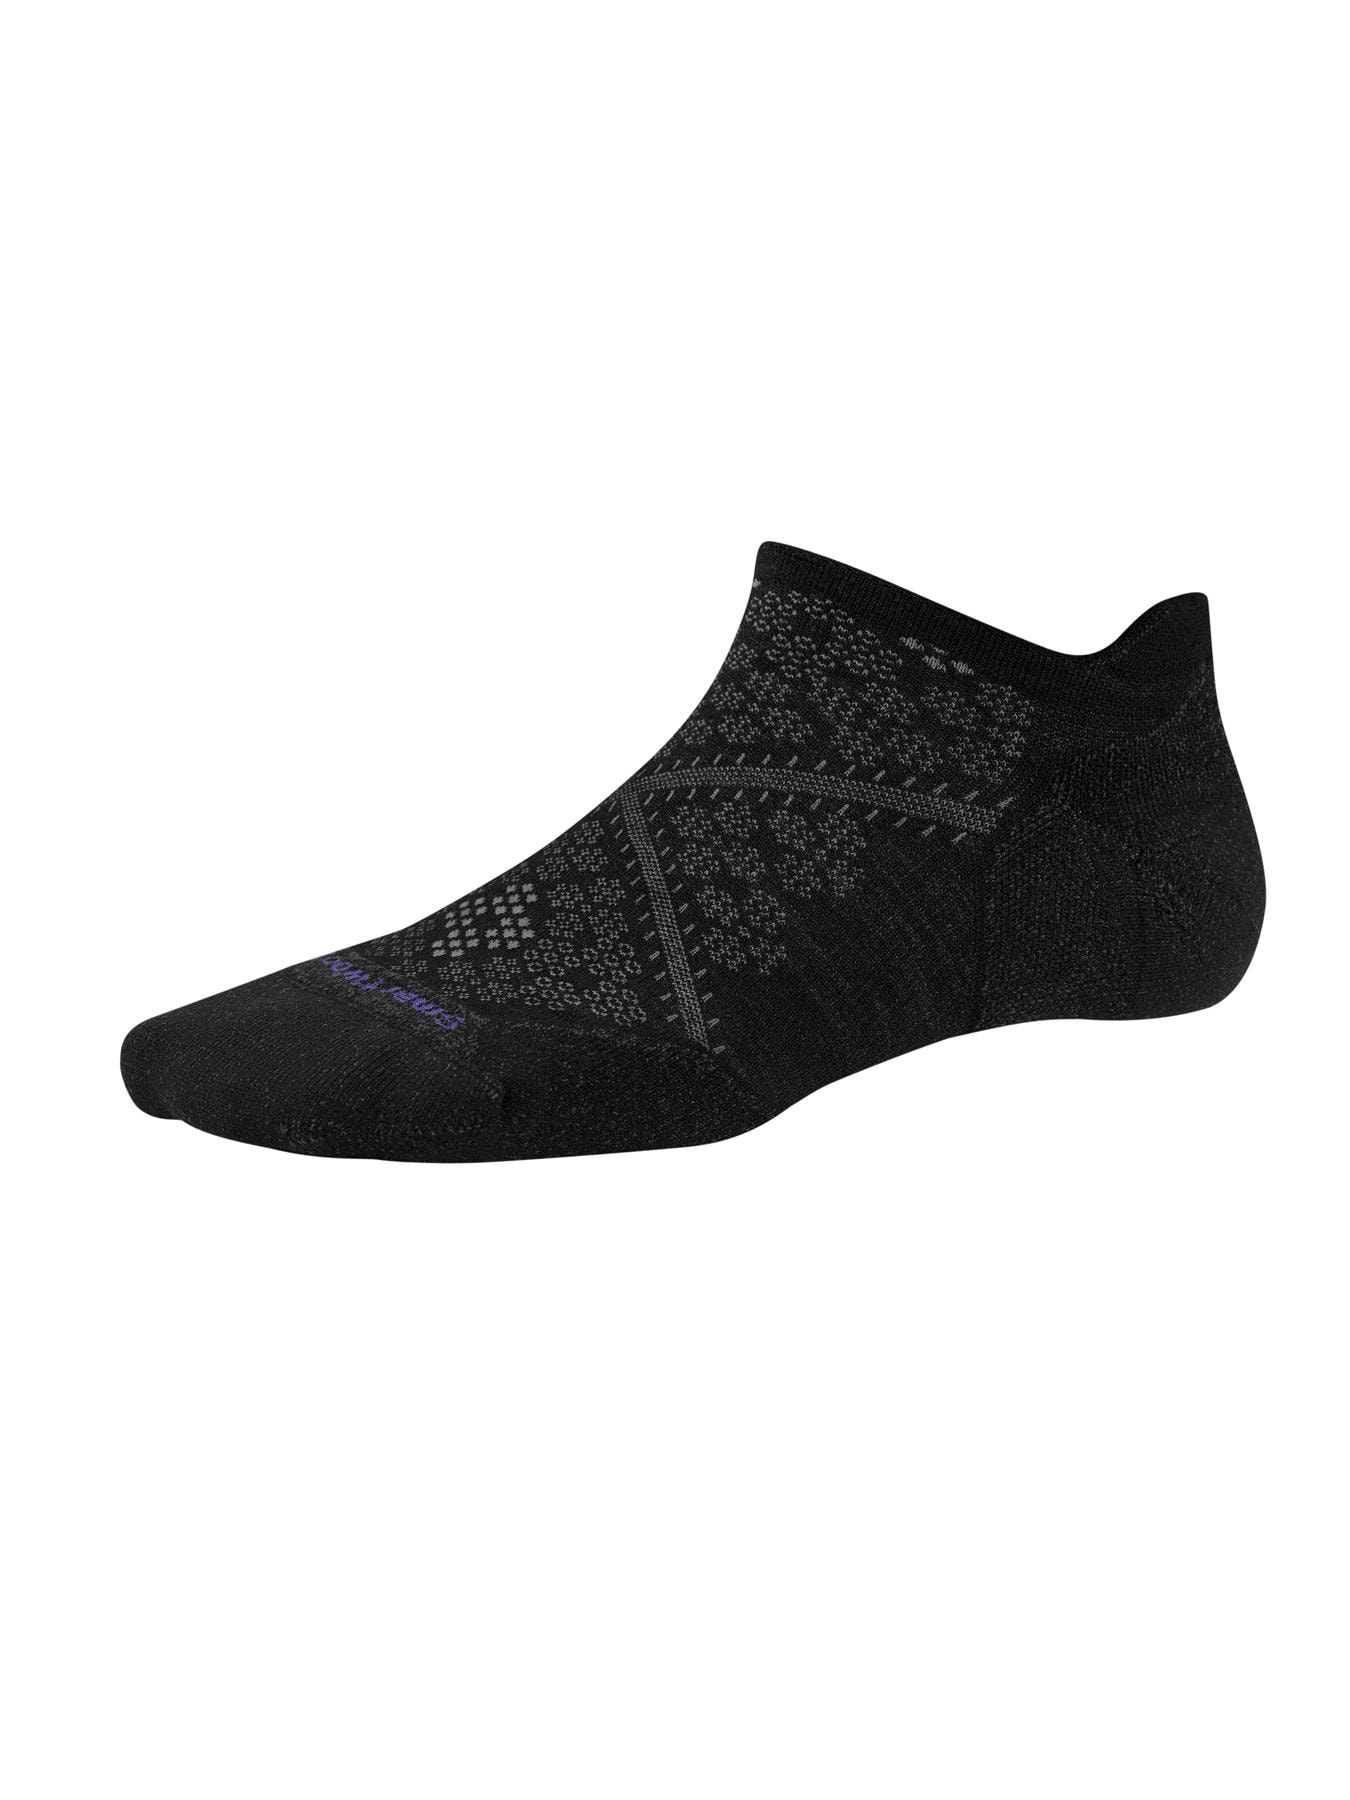 PhD Run Light Elite Micro Socks by Smartwool® | Athleta